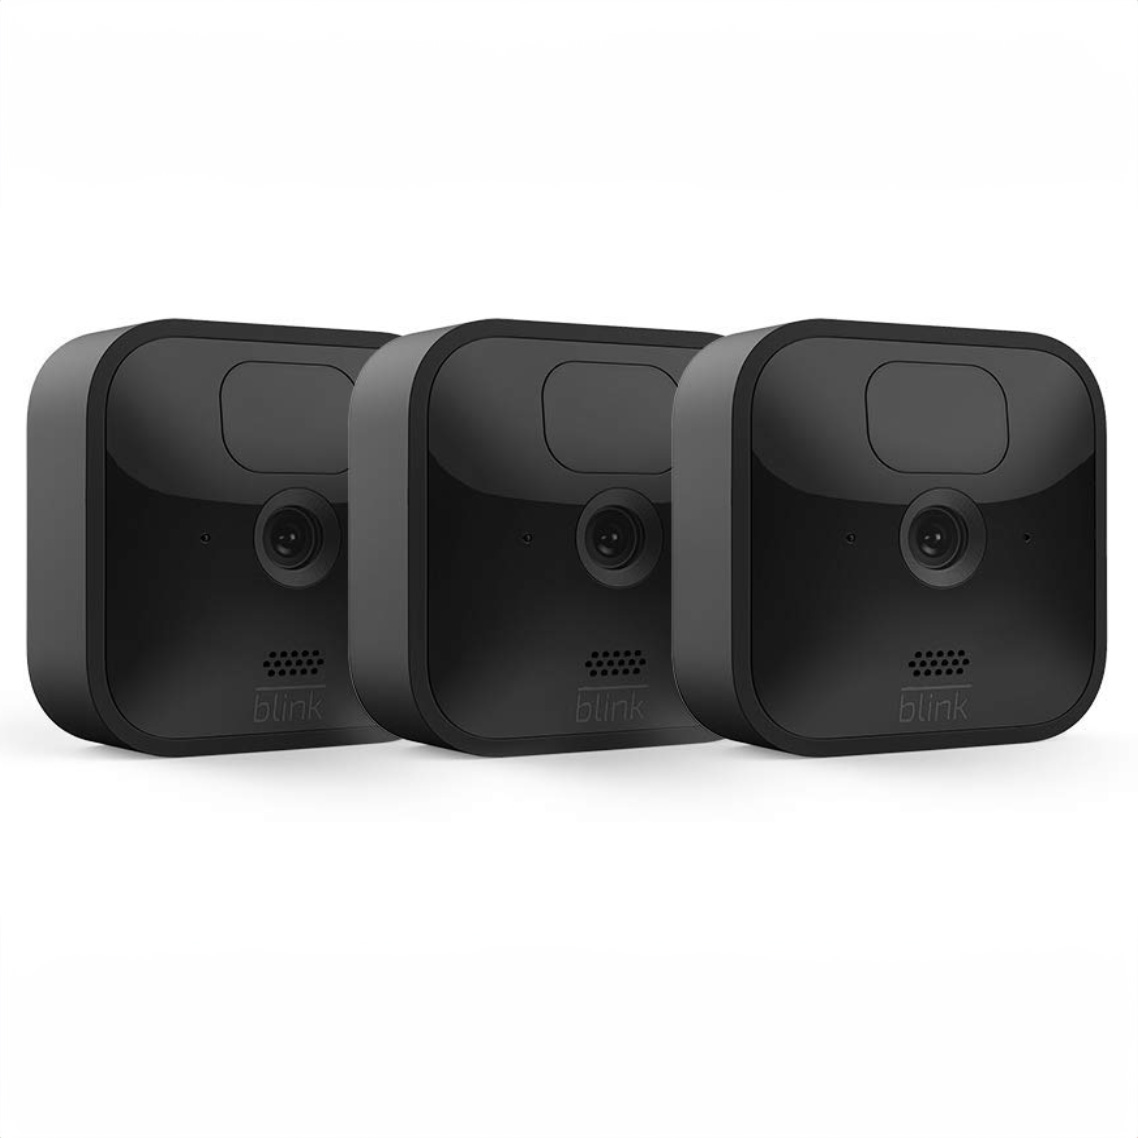 Three square-shaped Blink cameras